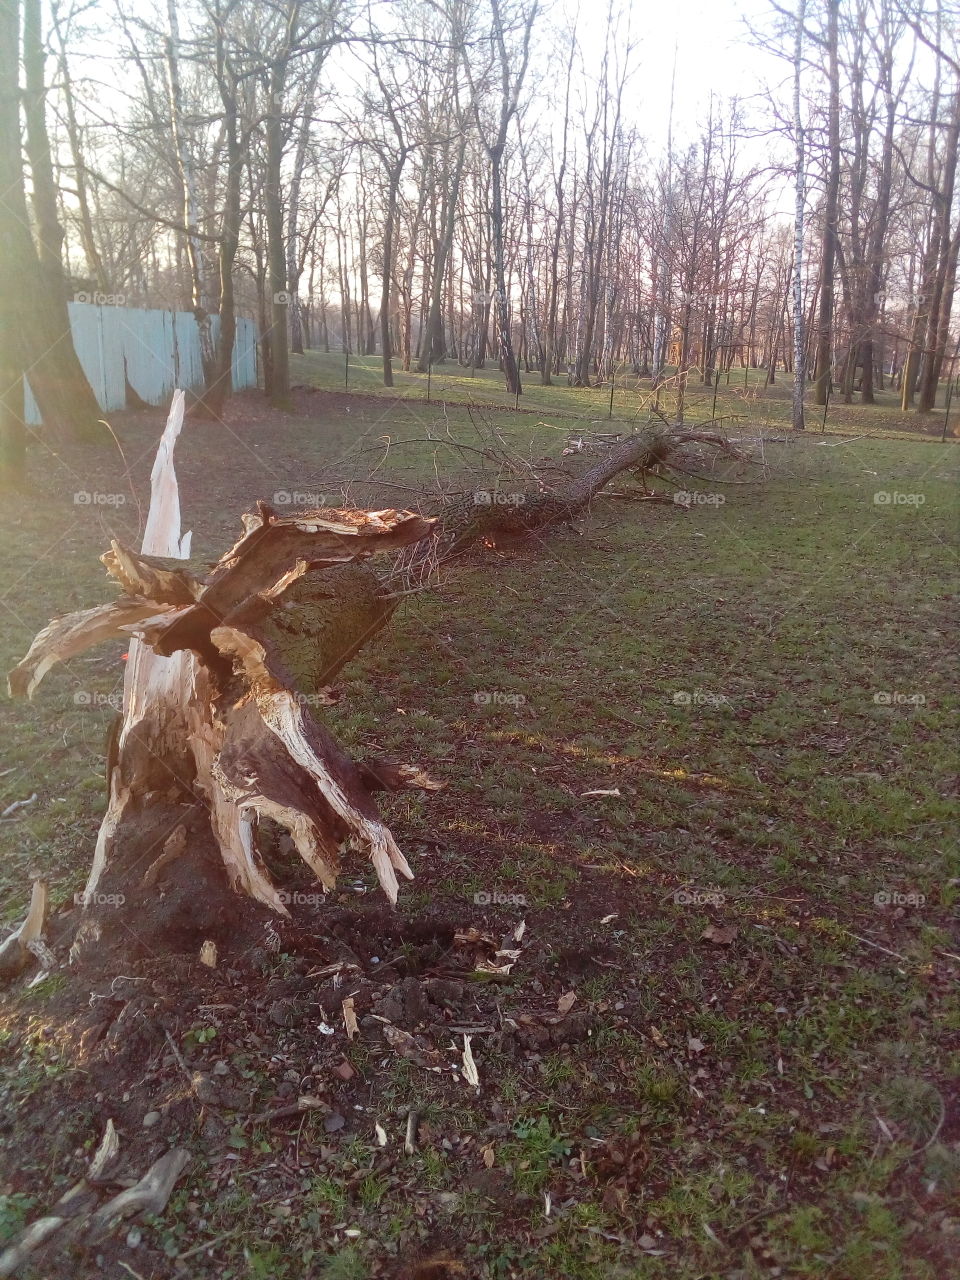 Tree hole, hollow tree, tree after lightning strike